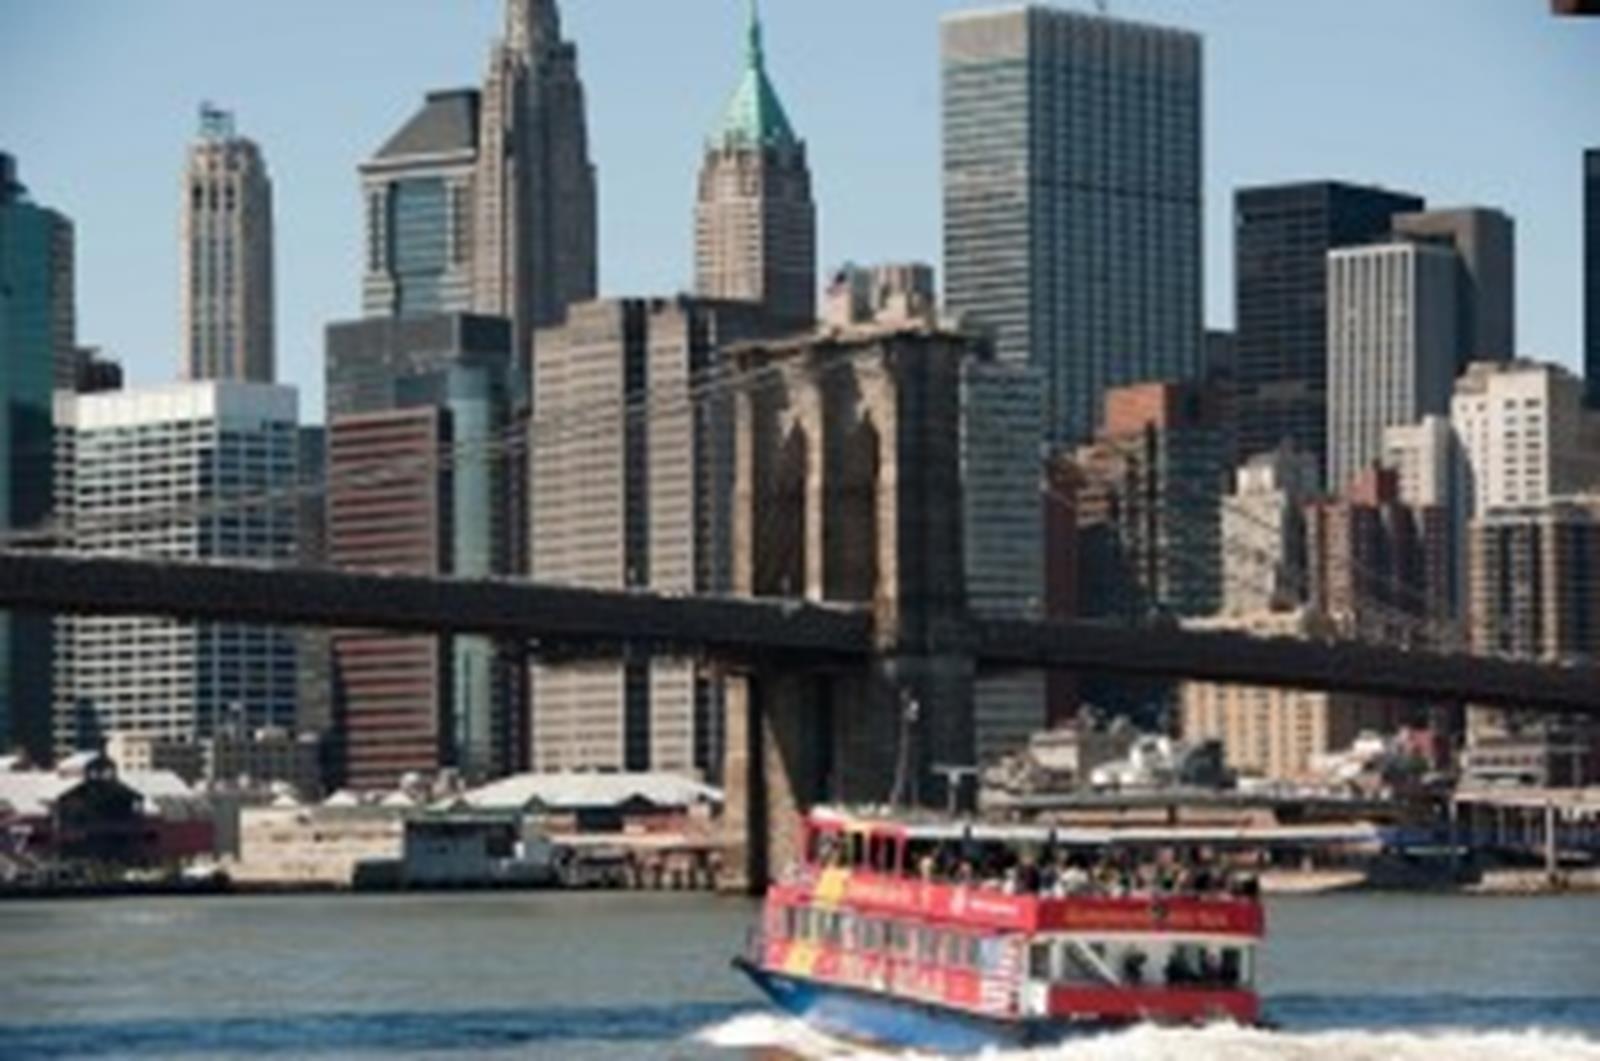 CitySightseeing New York® cruises sail under the Brooklyn, Manhattan and Williamsburg bridges.